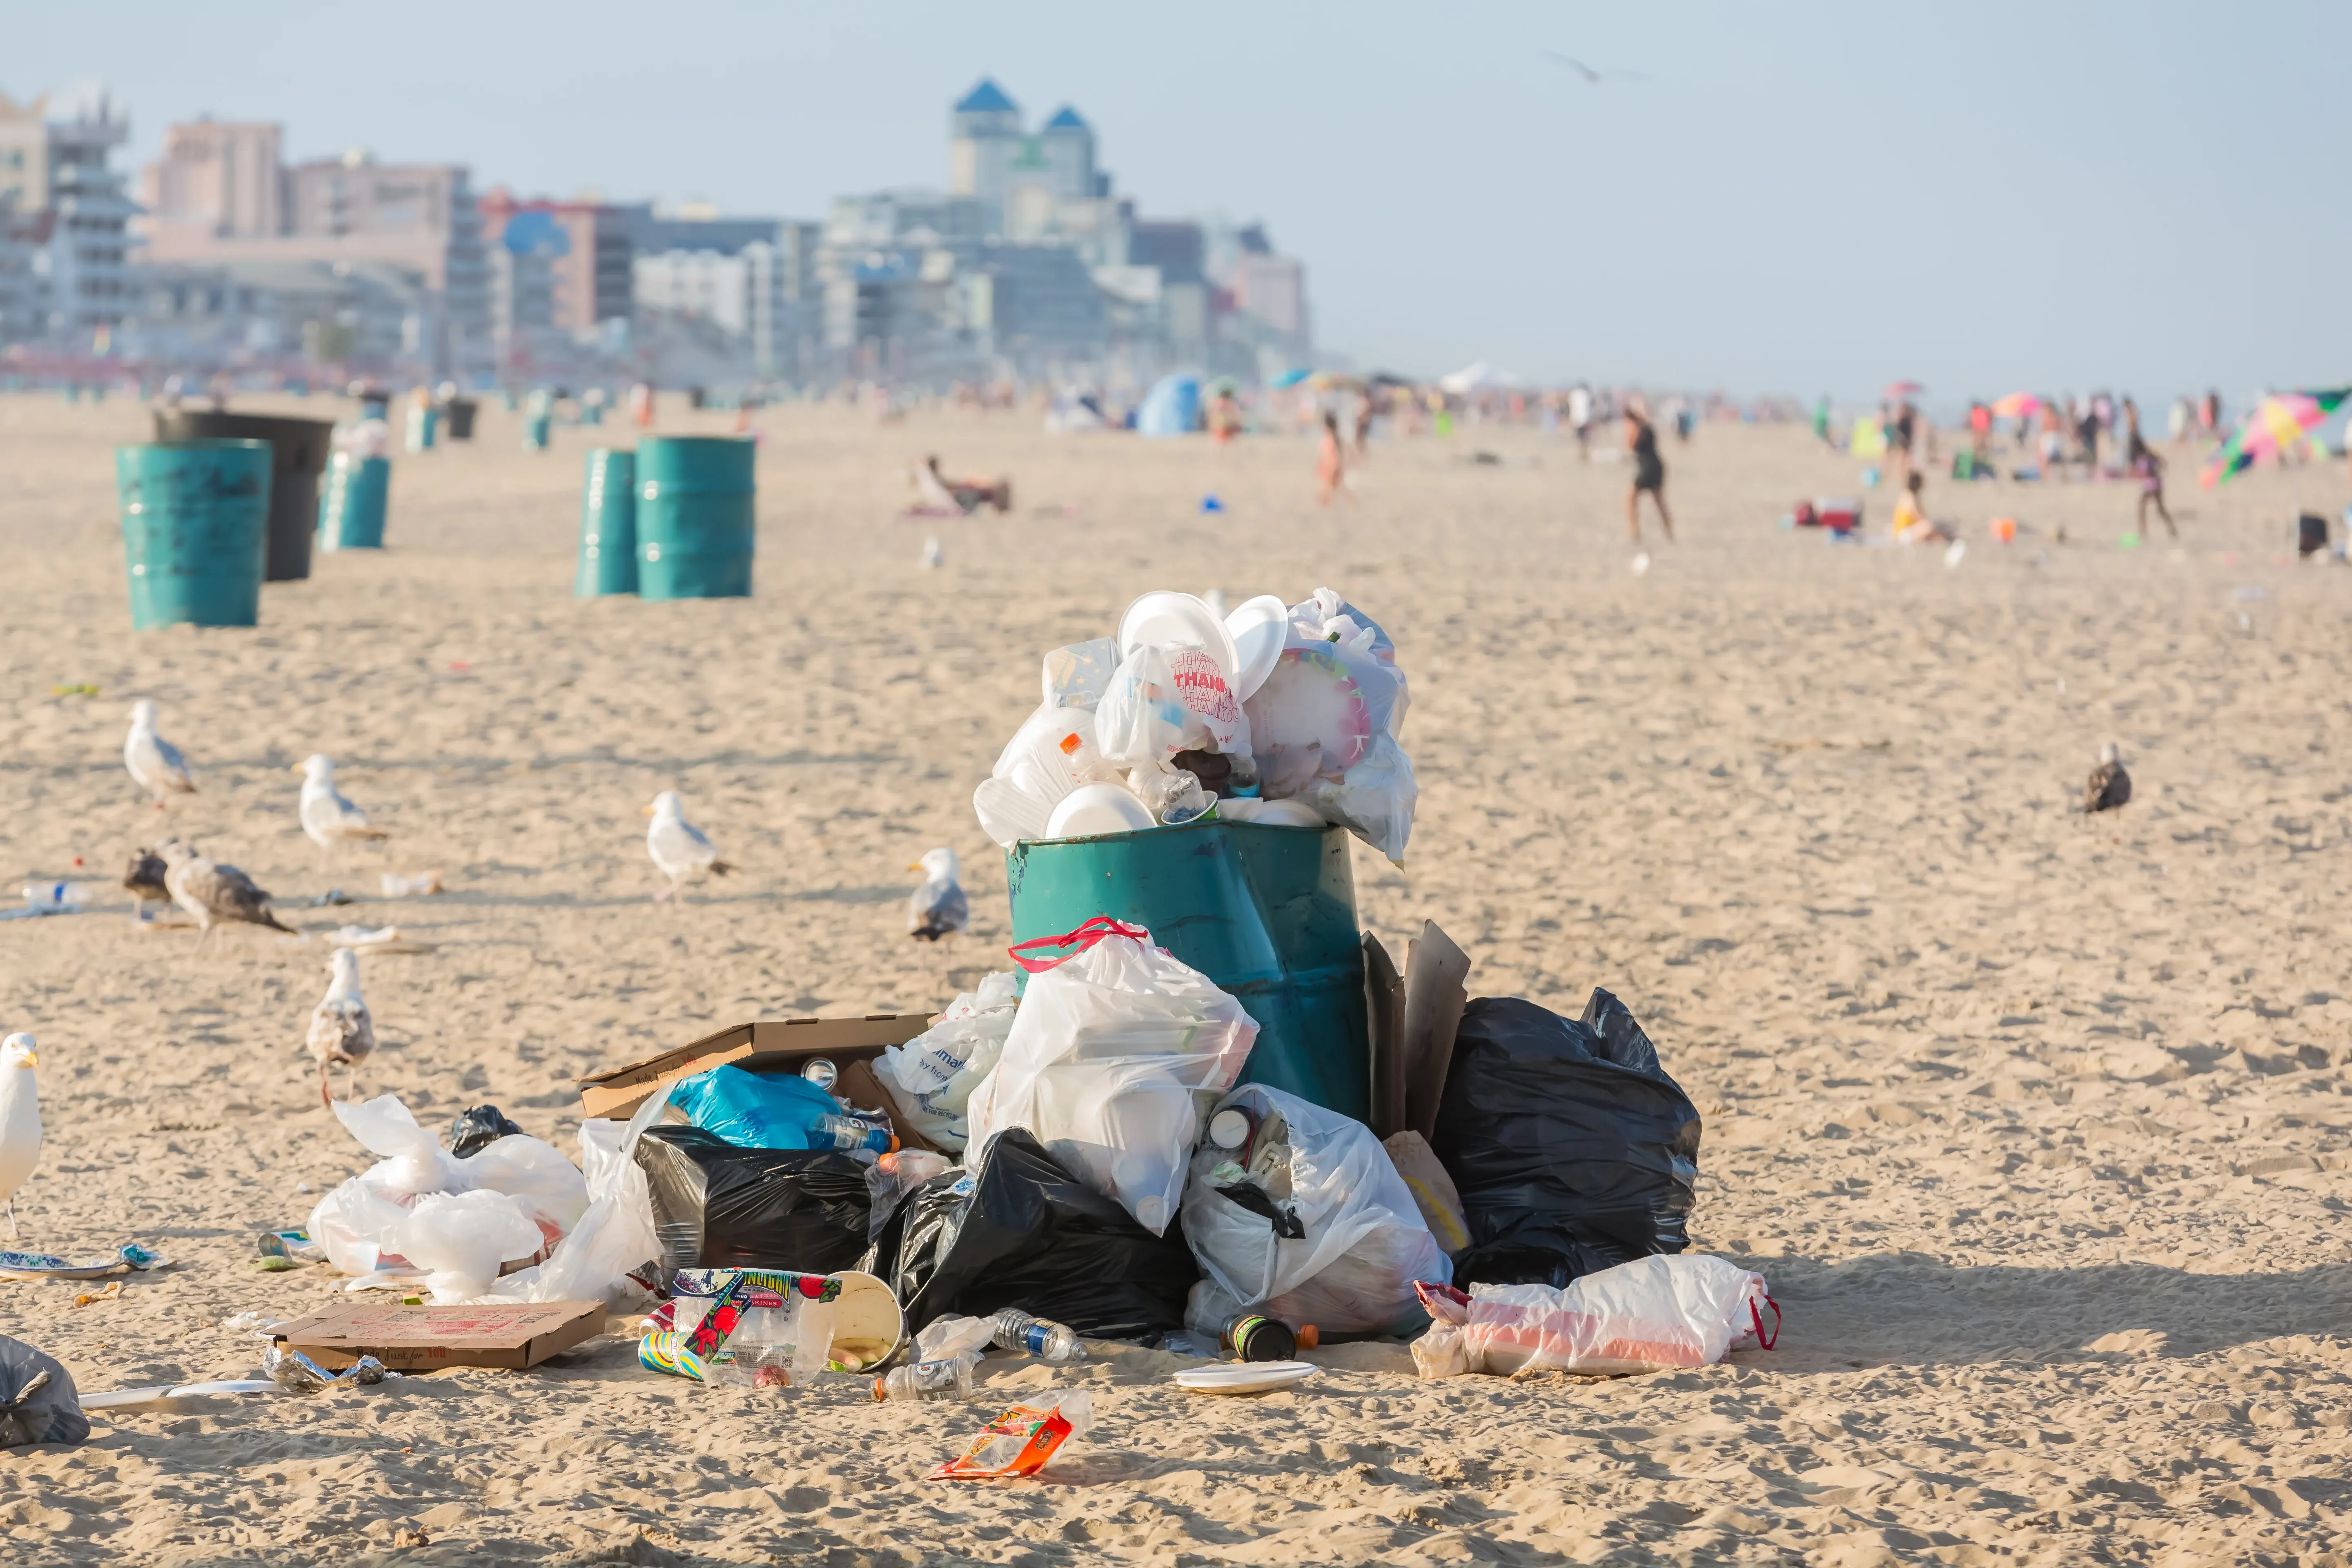 Trash piled around a waste bin on a sandy beach.